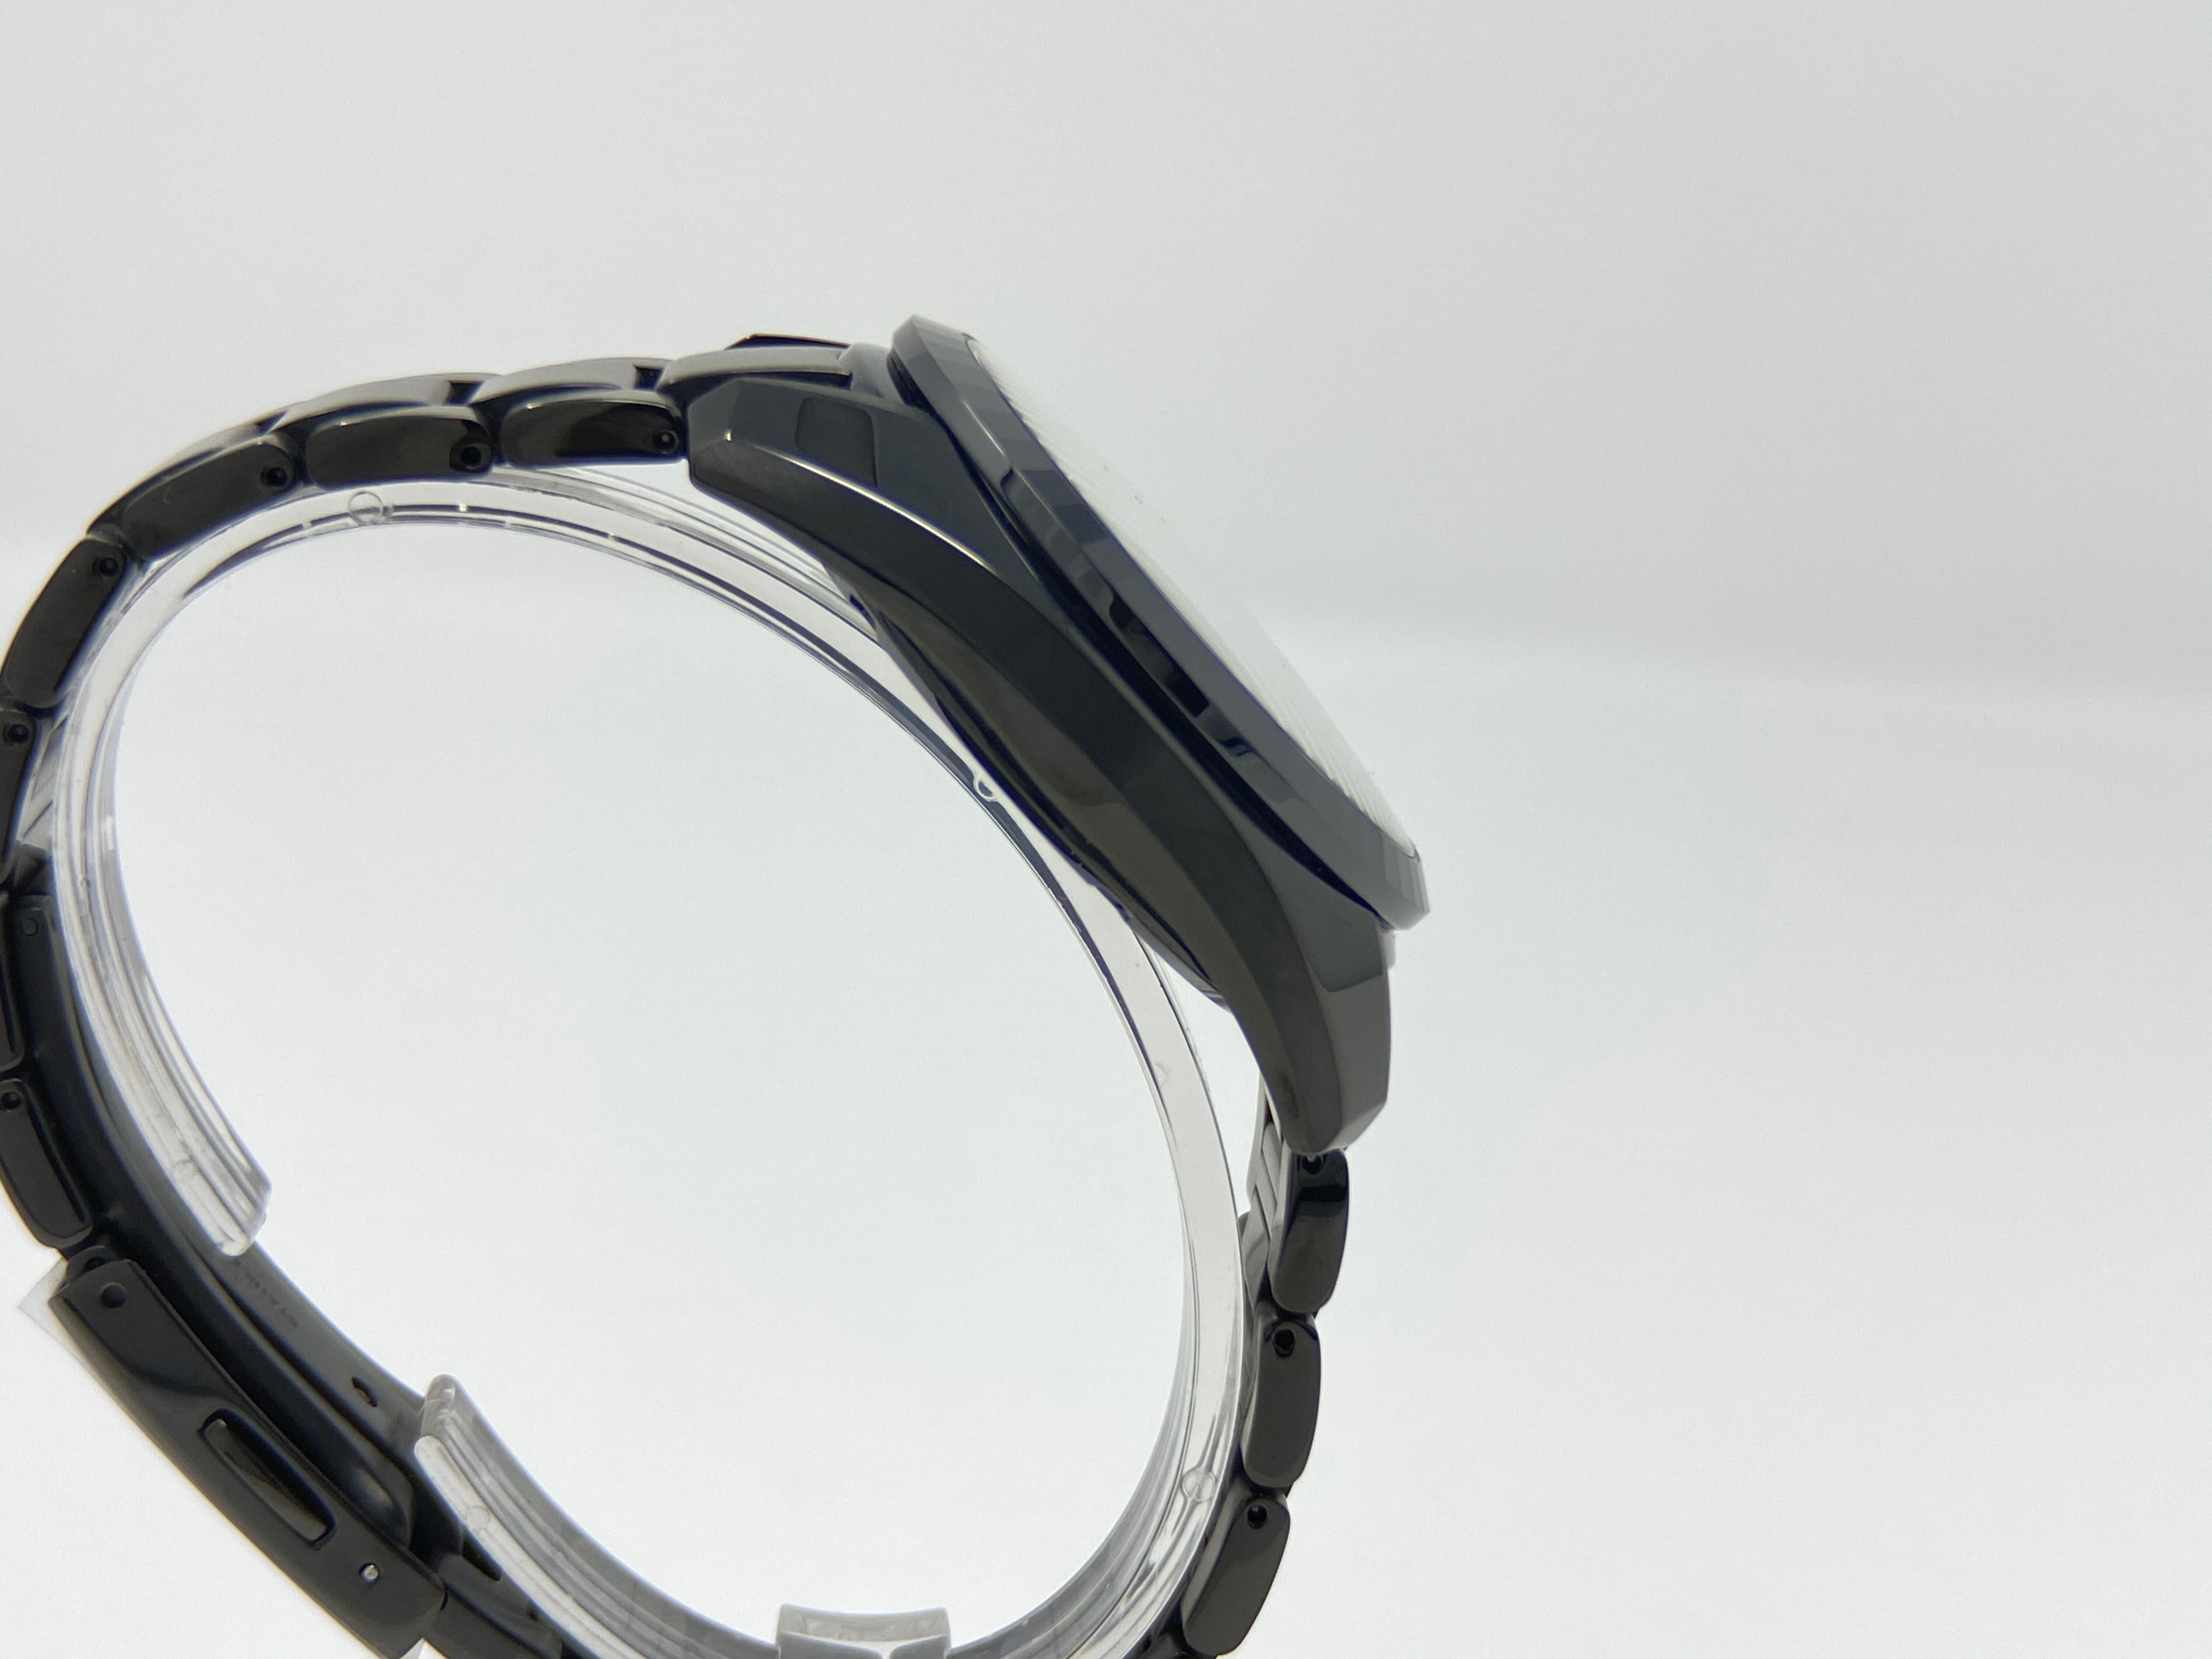 FS: Seiko Astron GPS Solar Dual-Time Limited Edition Watch SSH023 |  WatchUSeek Watch Forums